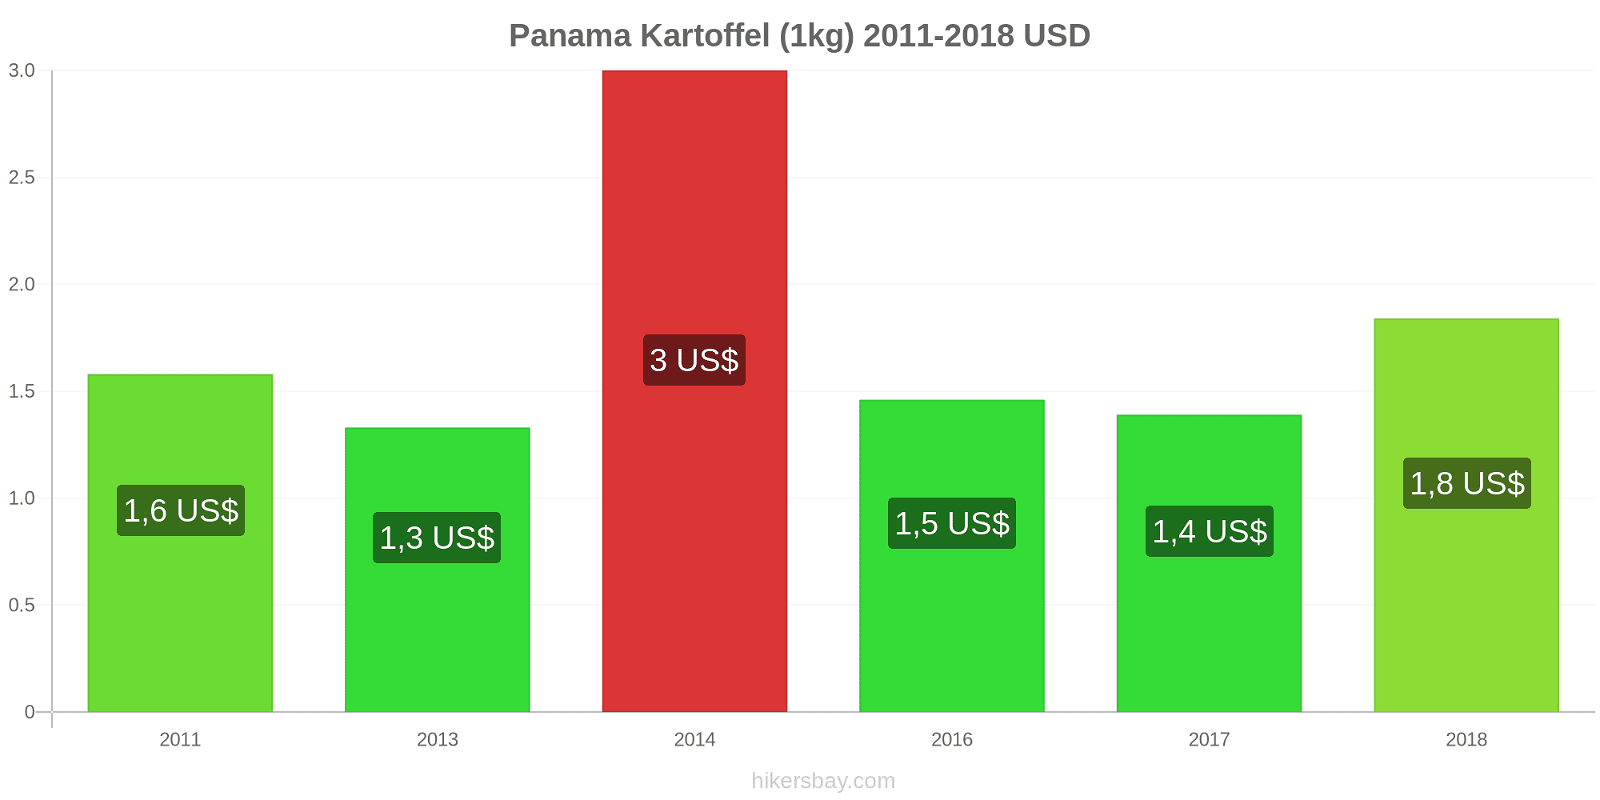 Panama prisændringer Kartoffel (1kg) hikersbay.com